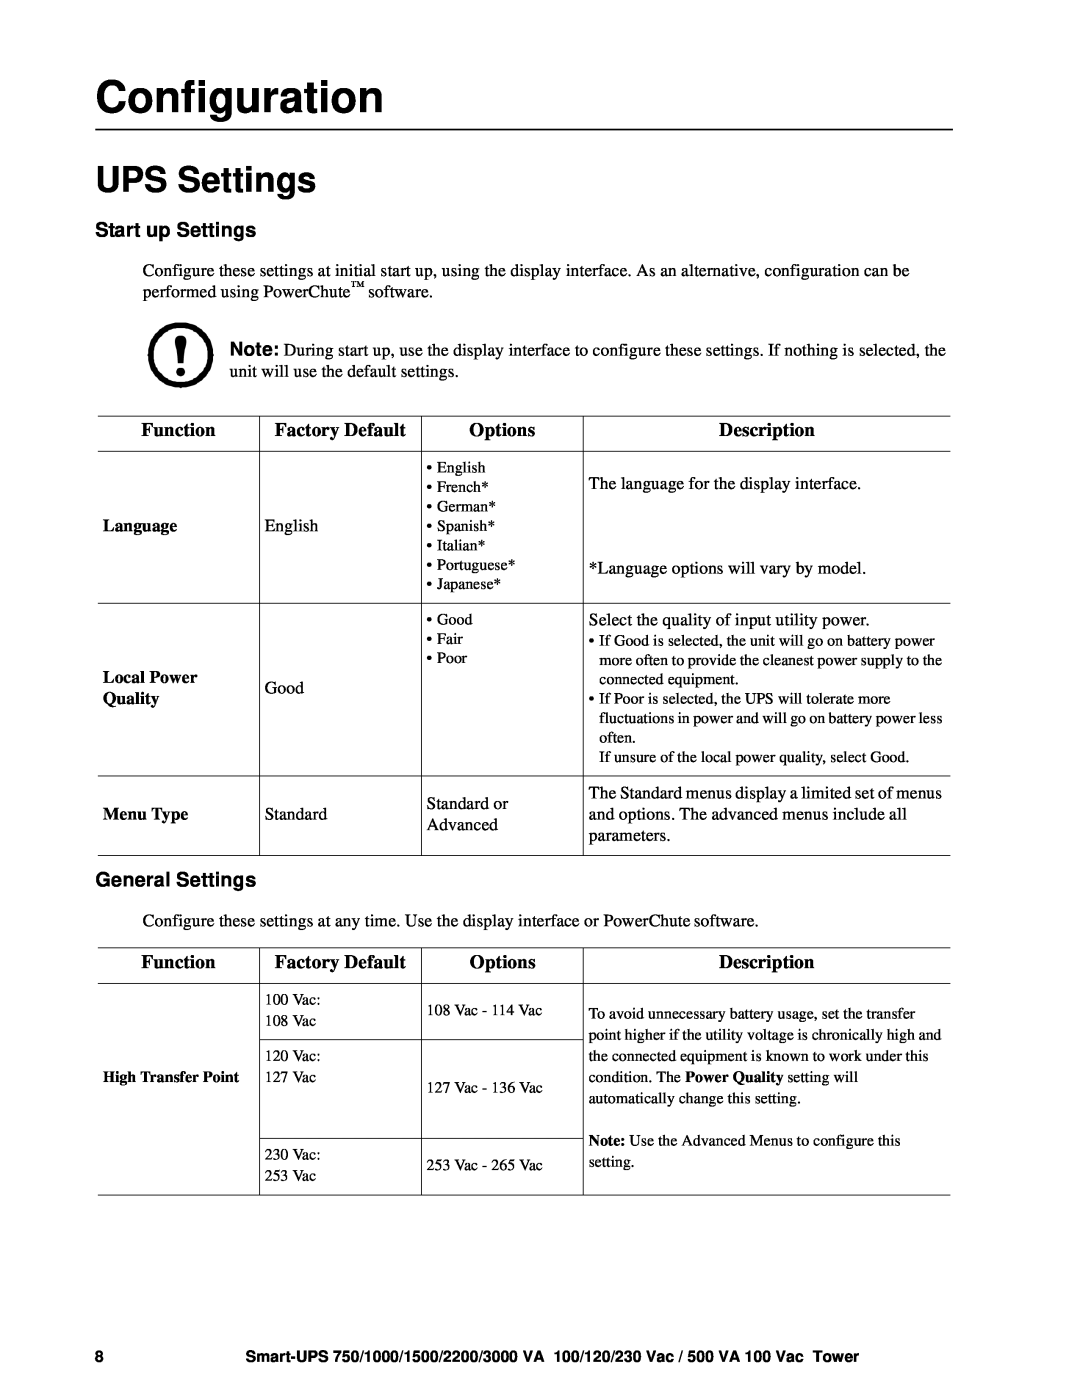 TRENDnet SMT1000 operation manual Configuration, UPS Settings 